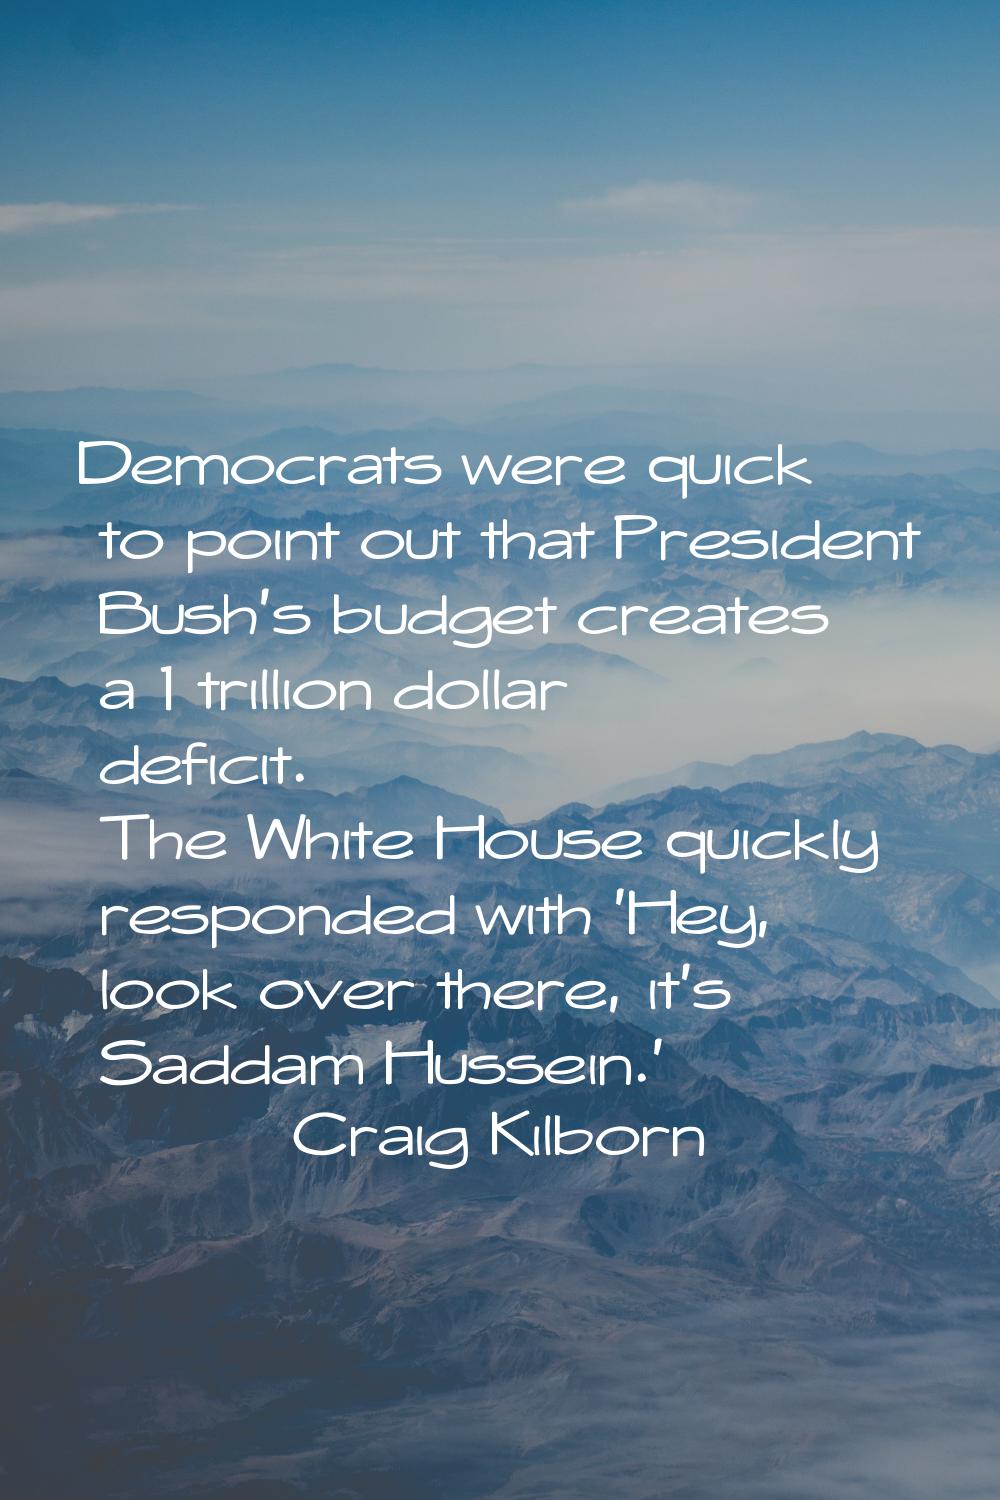 Democrats were quick to point out that President Bush's budget creates a 1 trillion dollar deficit.